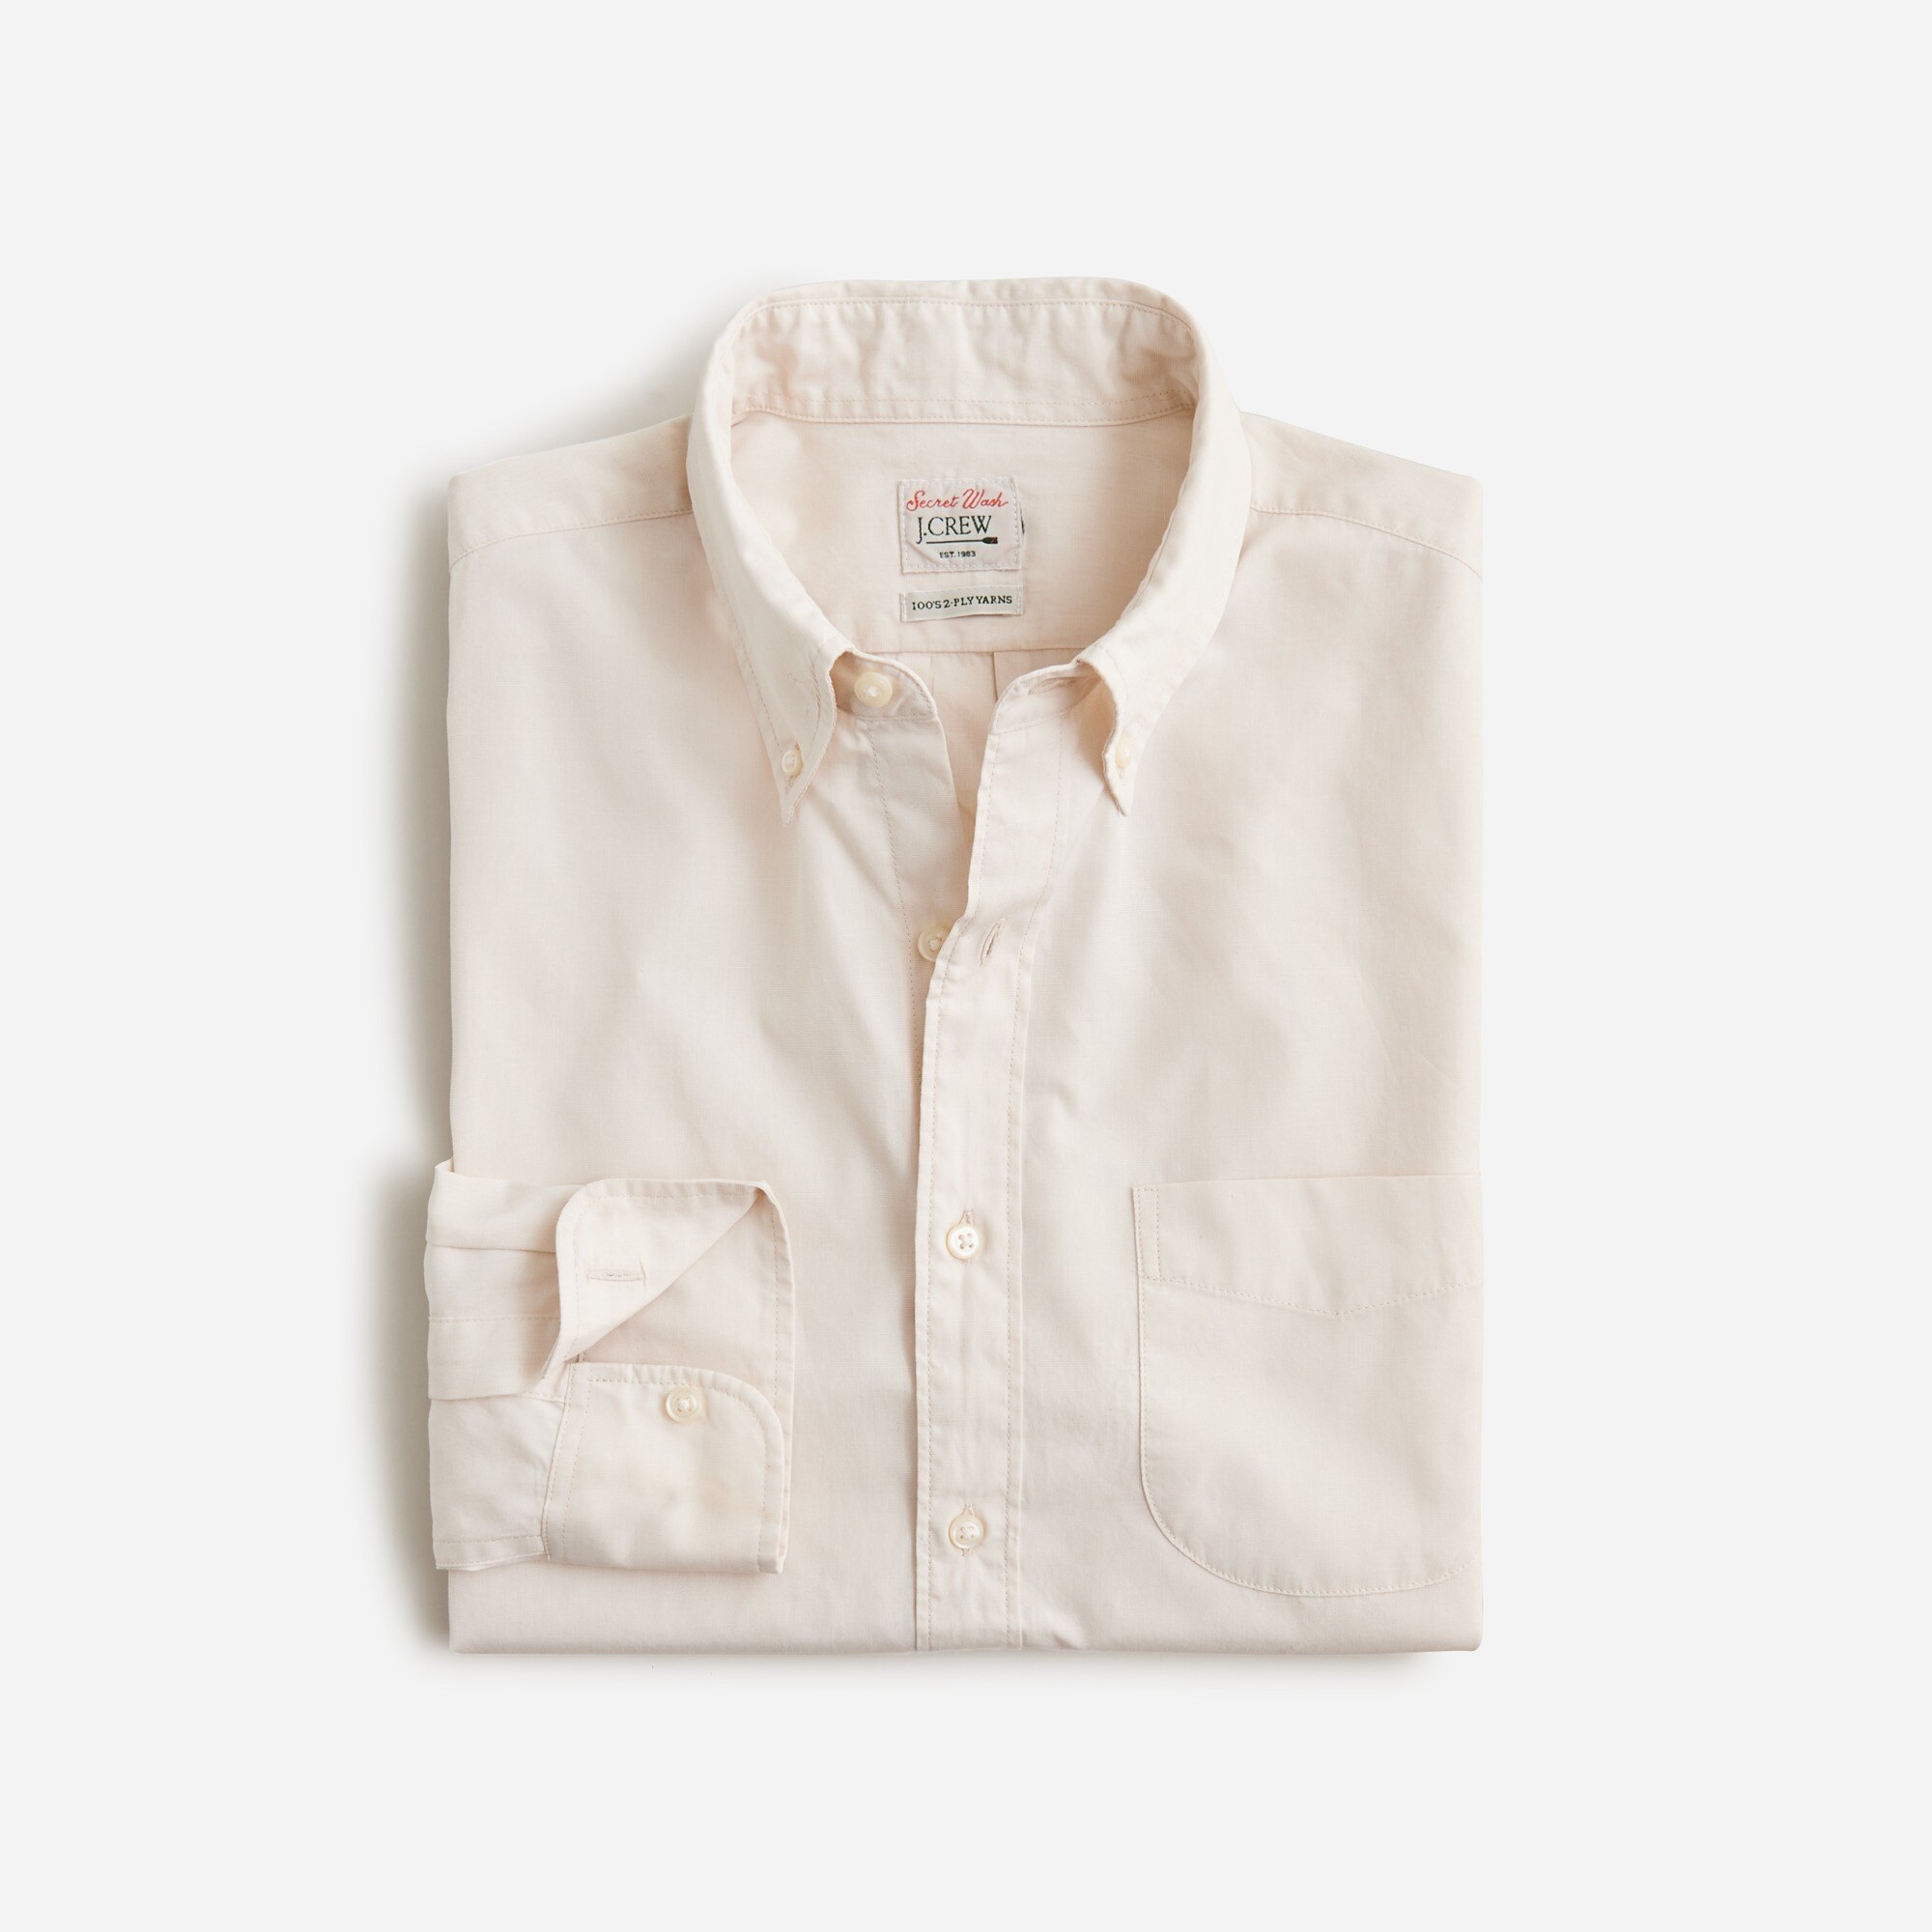  Slim Secret Wash cotton poplin shirt